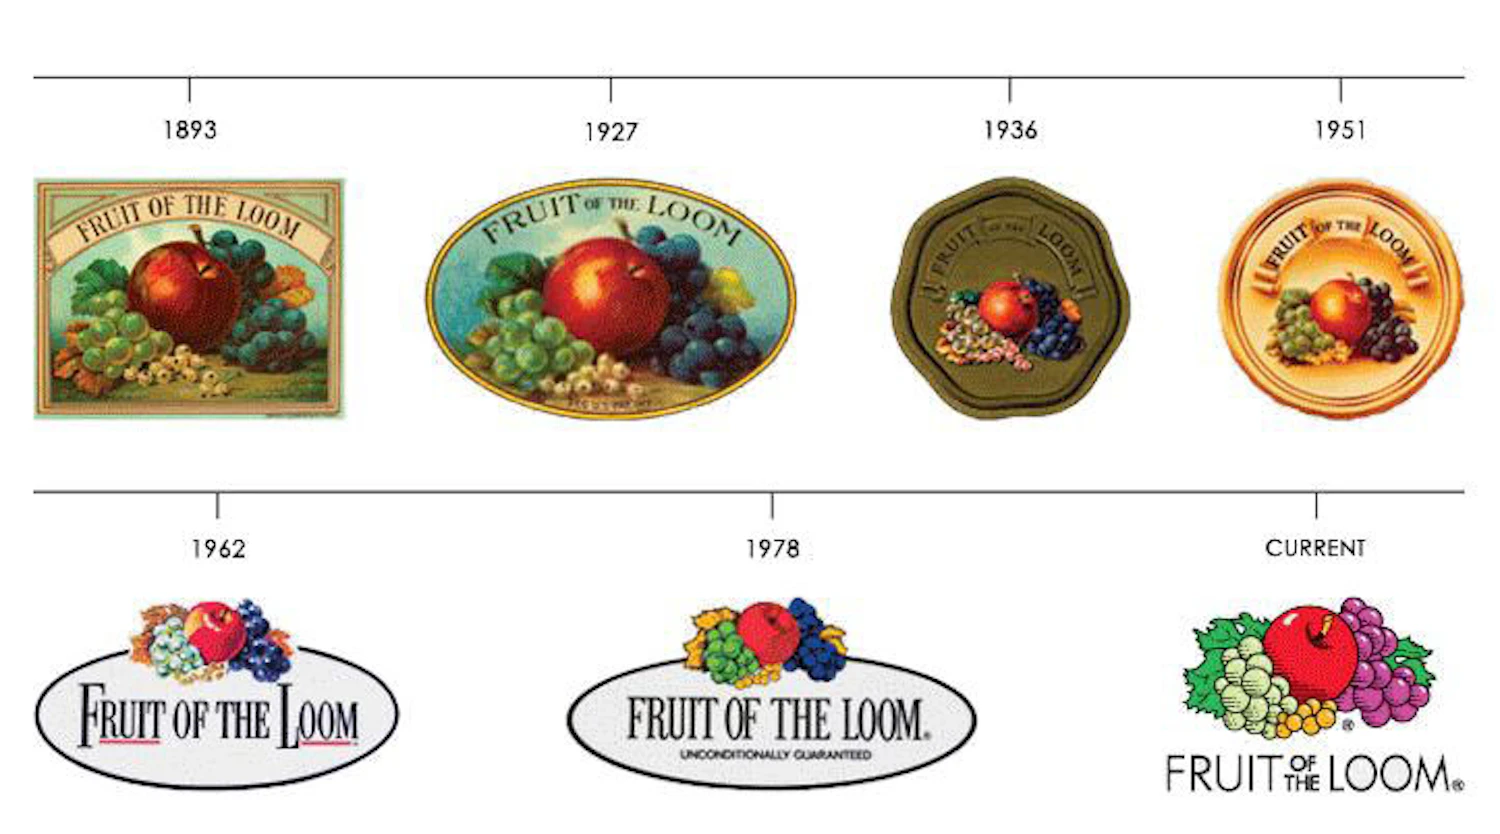 Evolution of brand logo